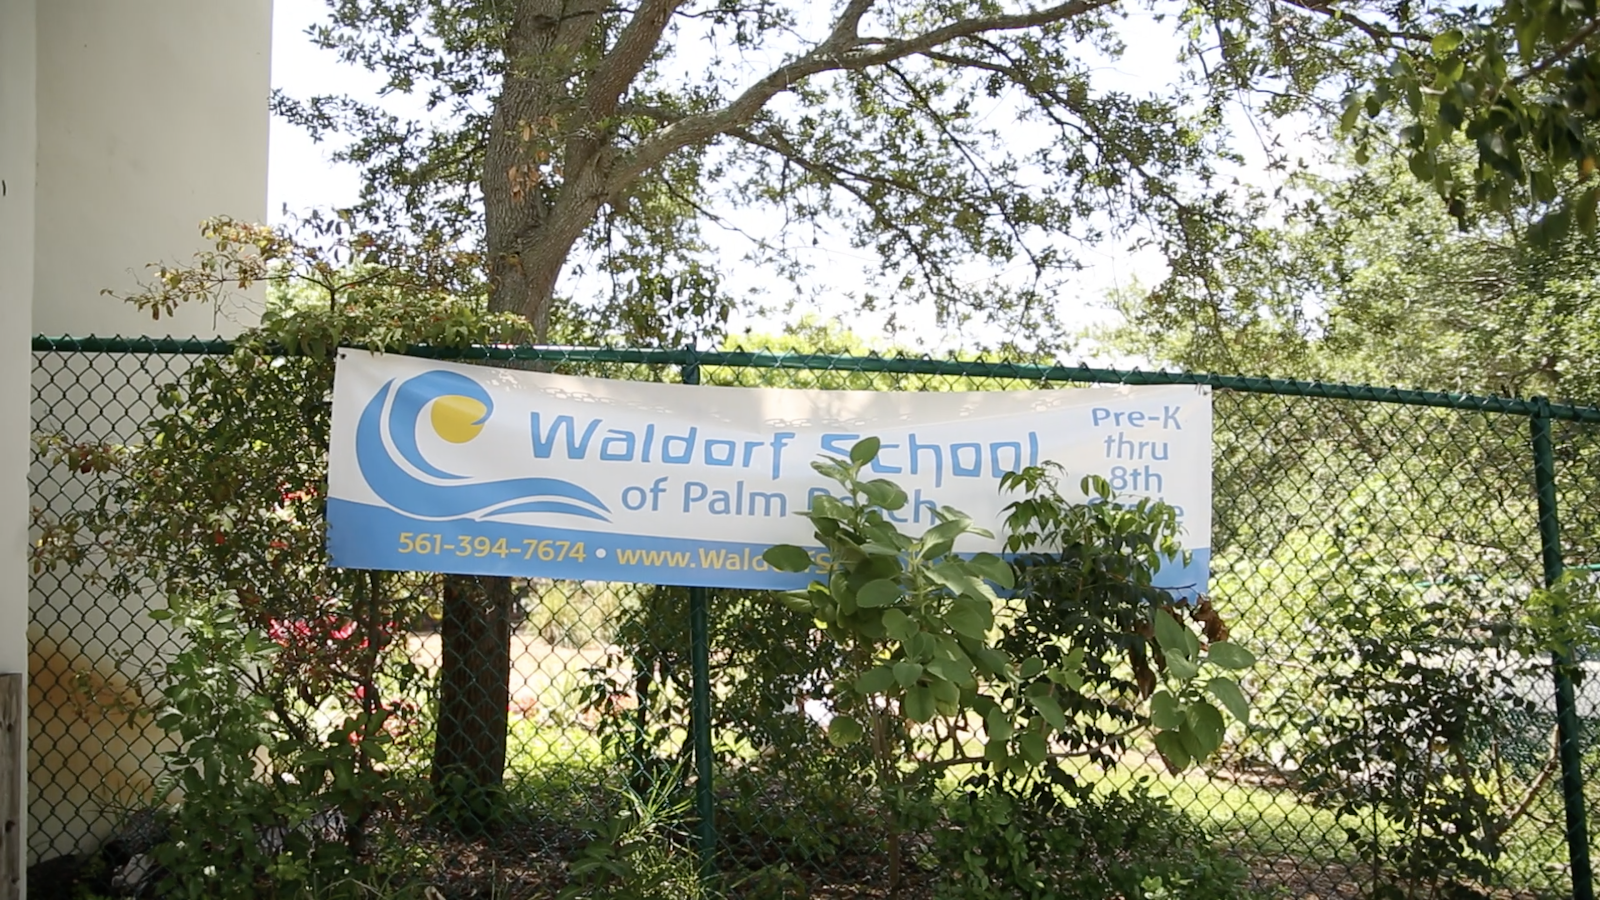 Waldorf School of Palm Beach